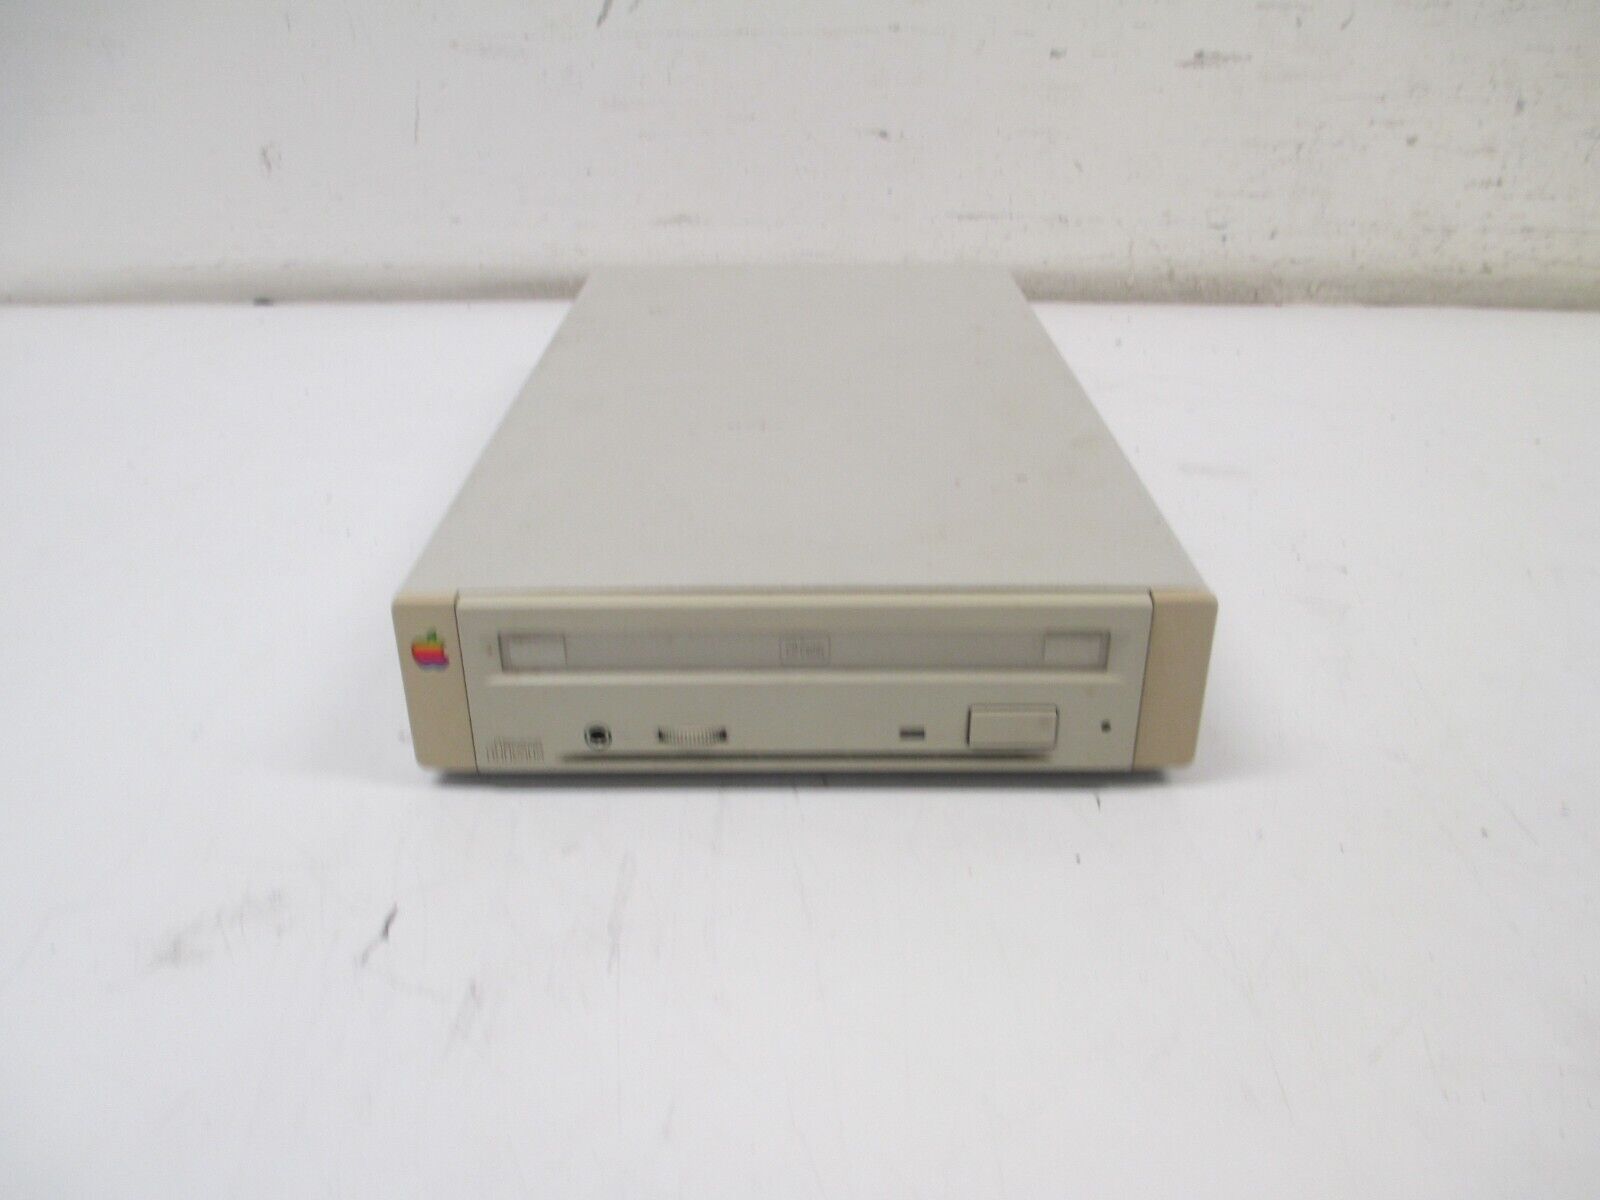 Vintage Apple CD 300 External CD-ROM Drive